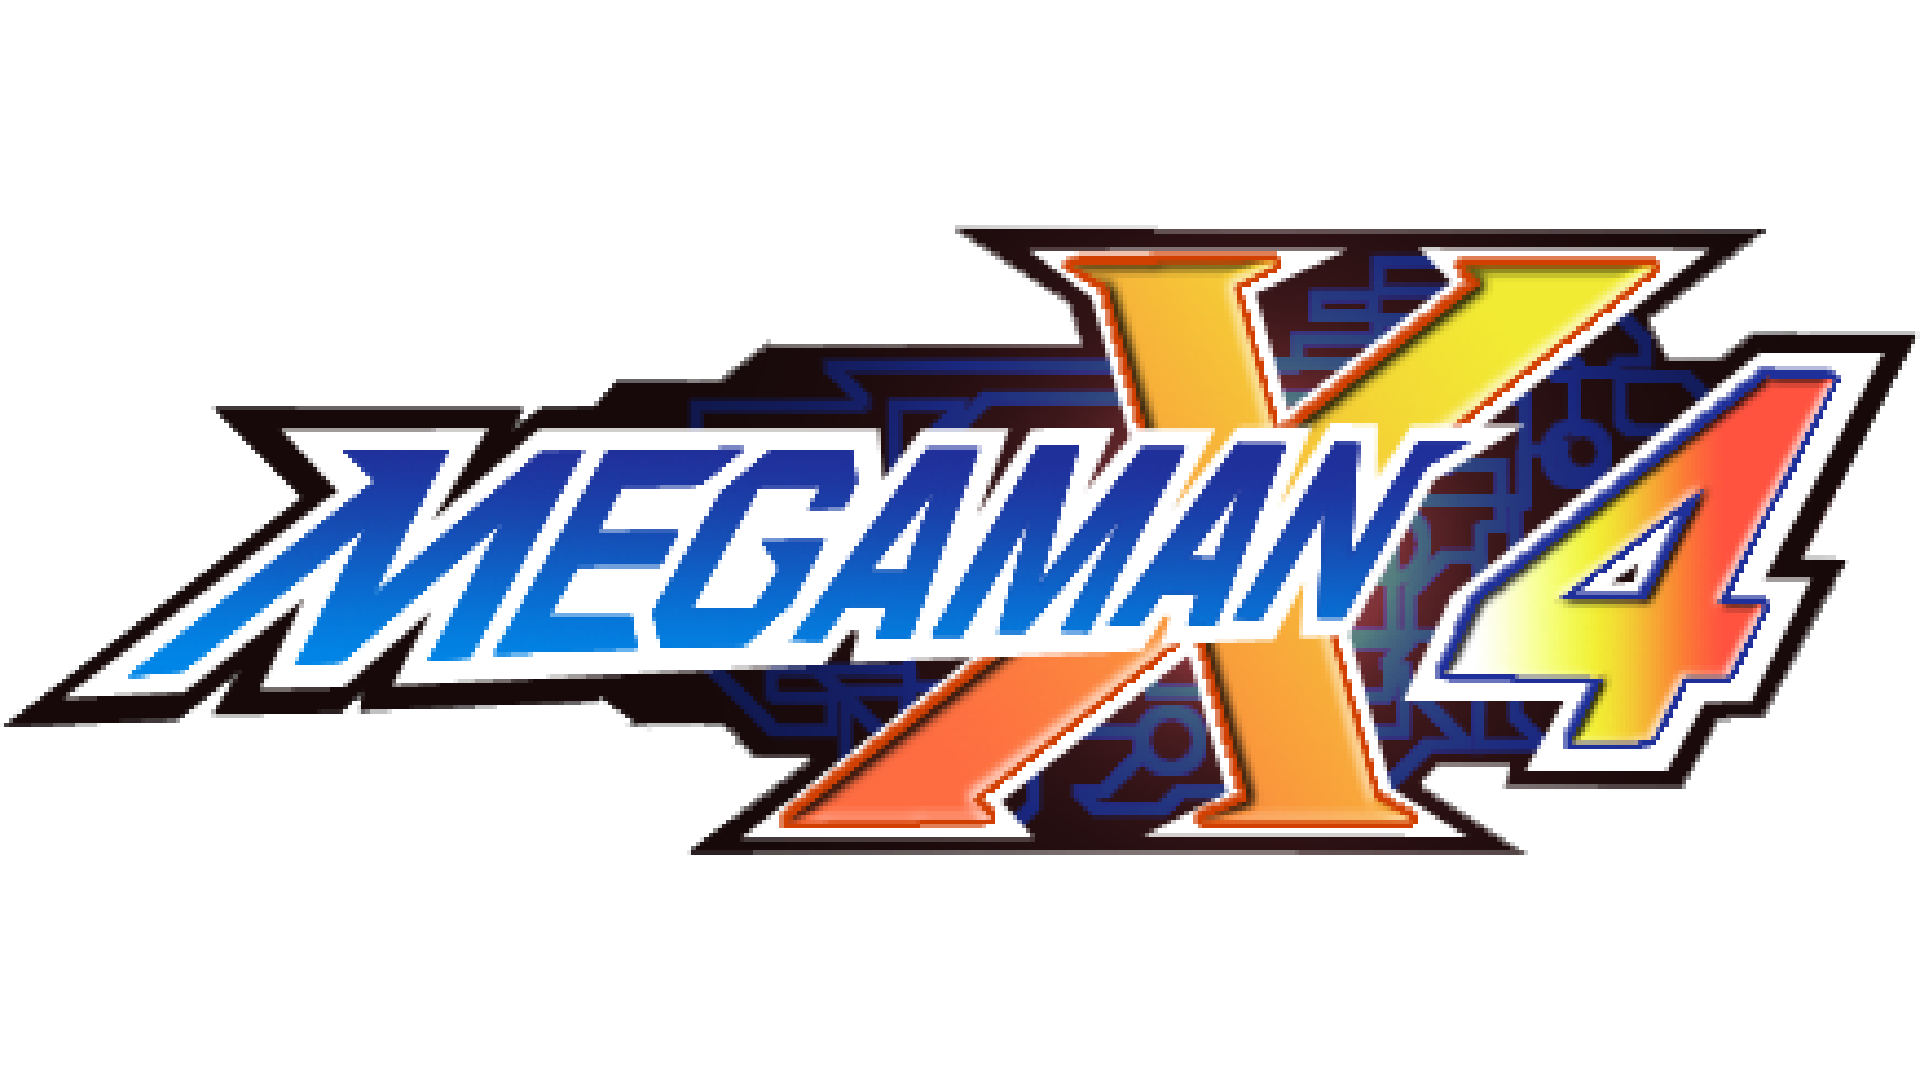 The Classicist – Megaman X4